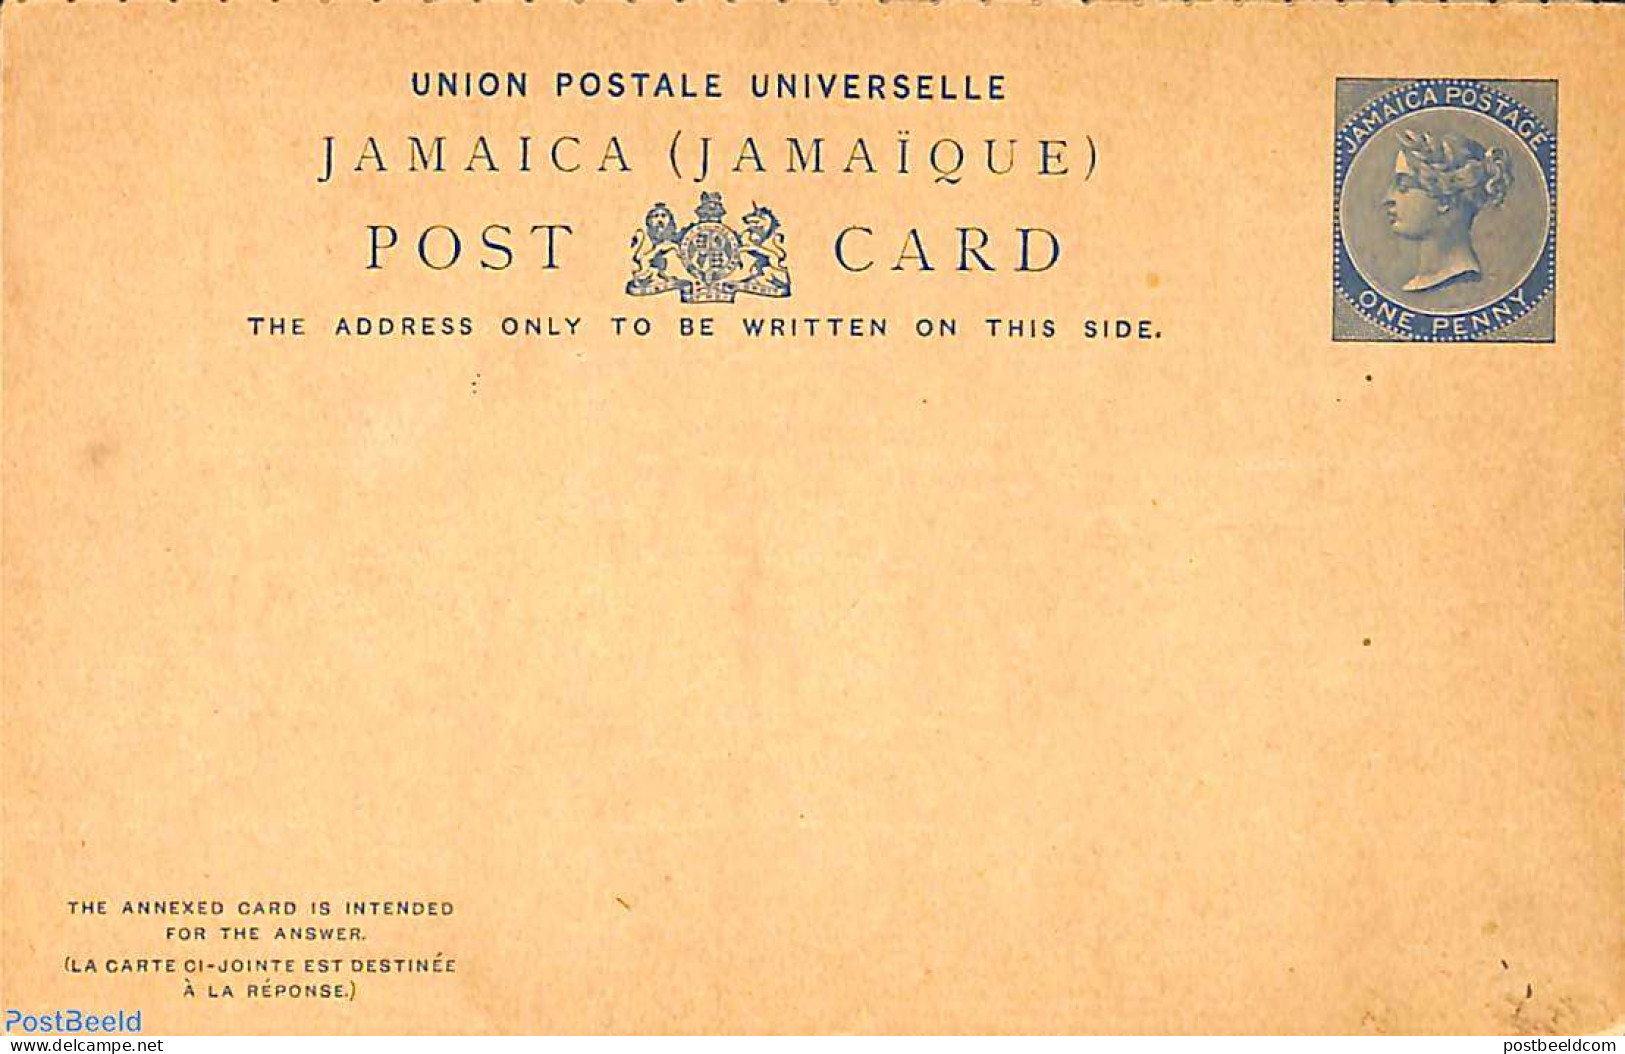 Jamaica 1891 Reply Paid Postcard 1/1d, Unused Postal Stationary - Giamaica (1962-...)